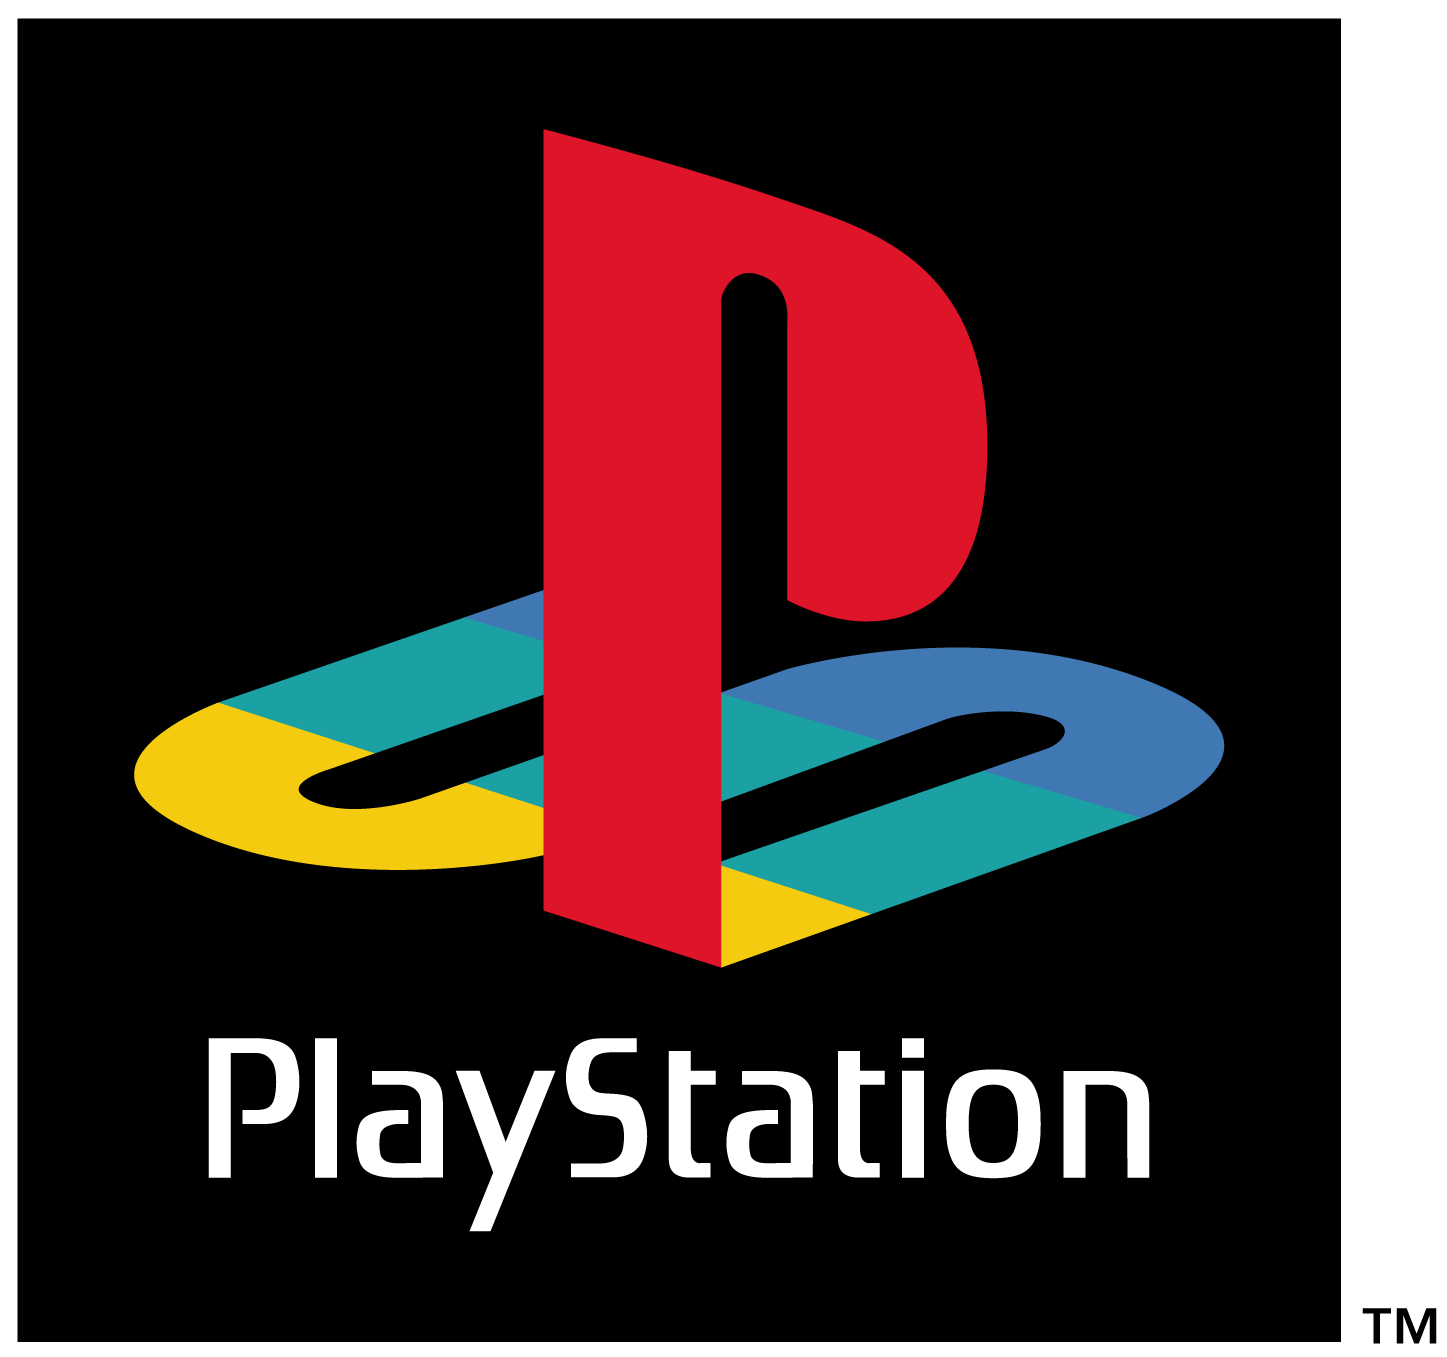 Original PS1 / Playstation logo